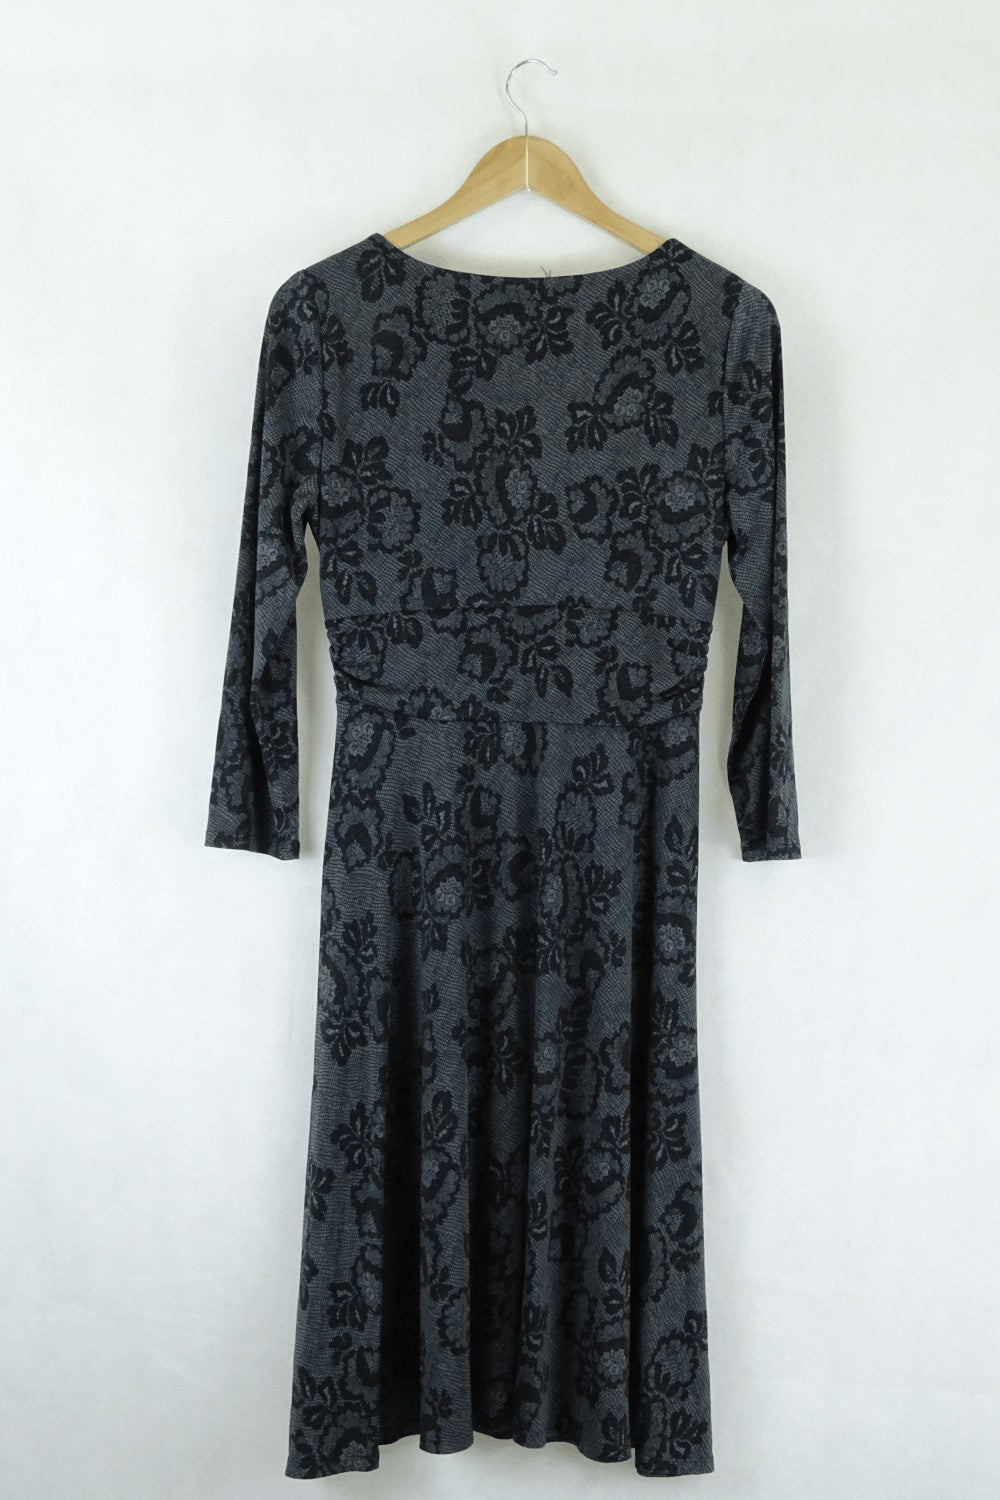 Diana Ferrari Pattern Floral Charcoal And Black Dress L